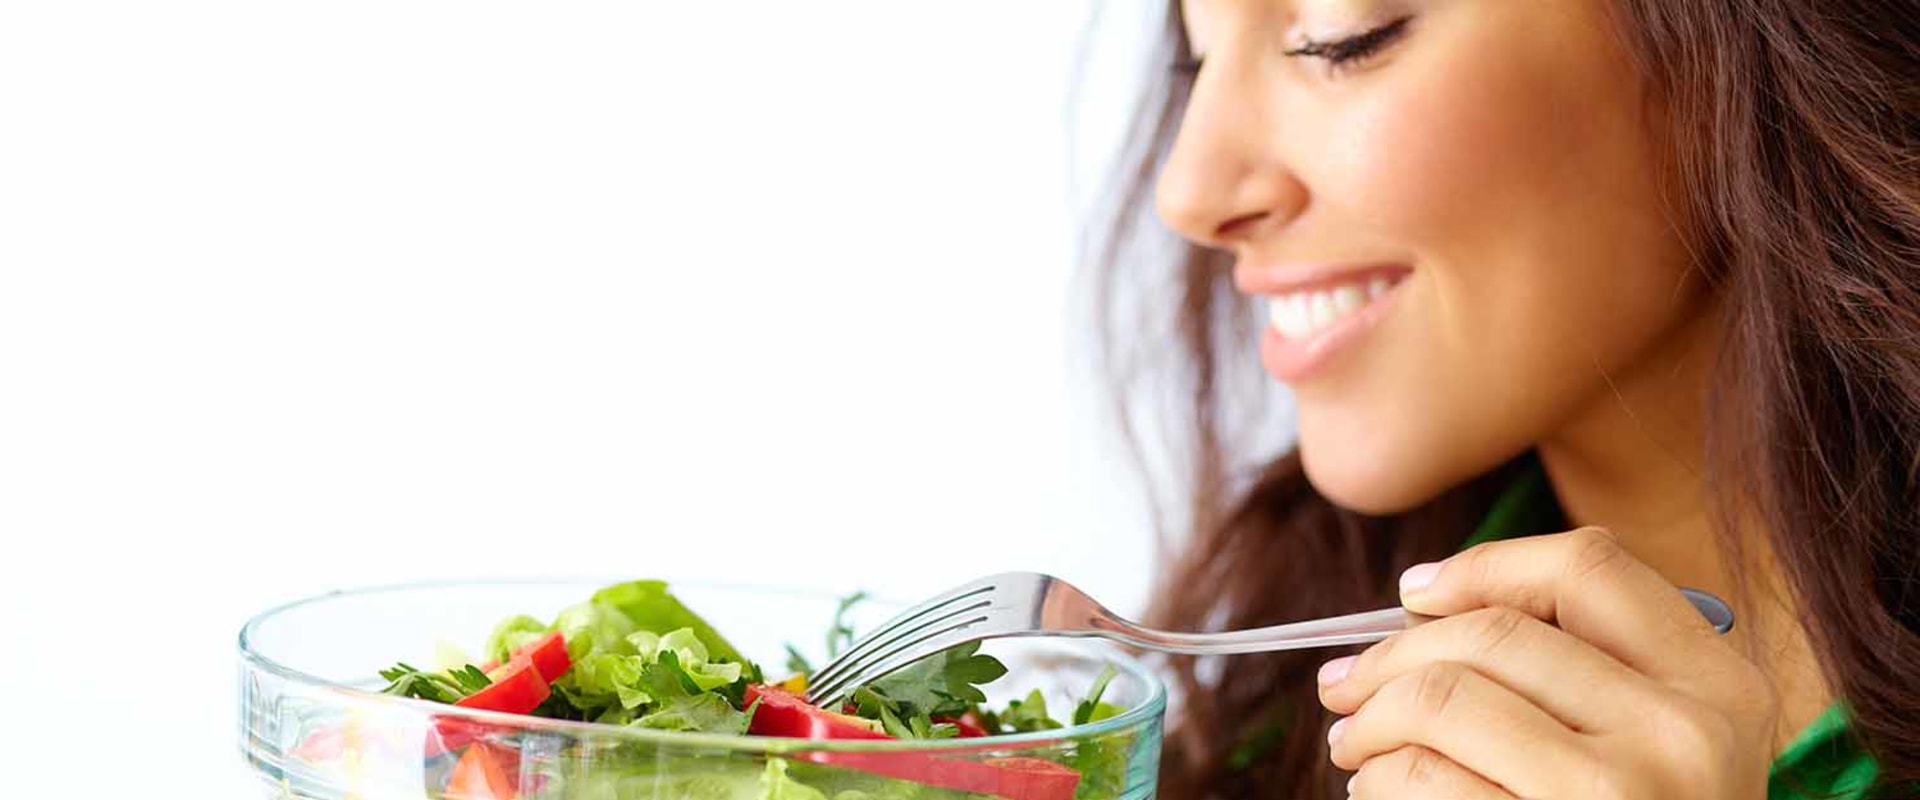 Does eating healthy get easier?